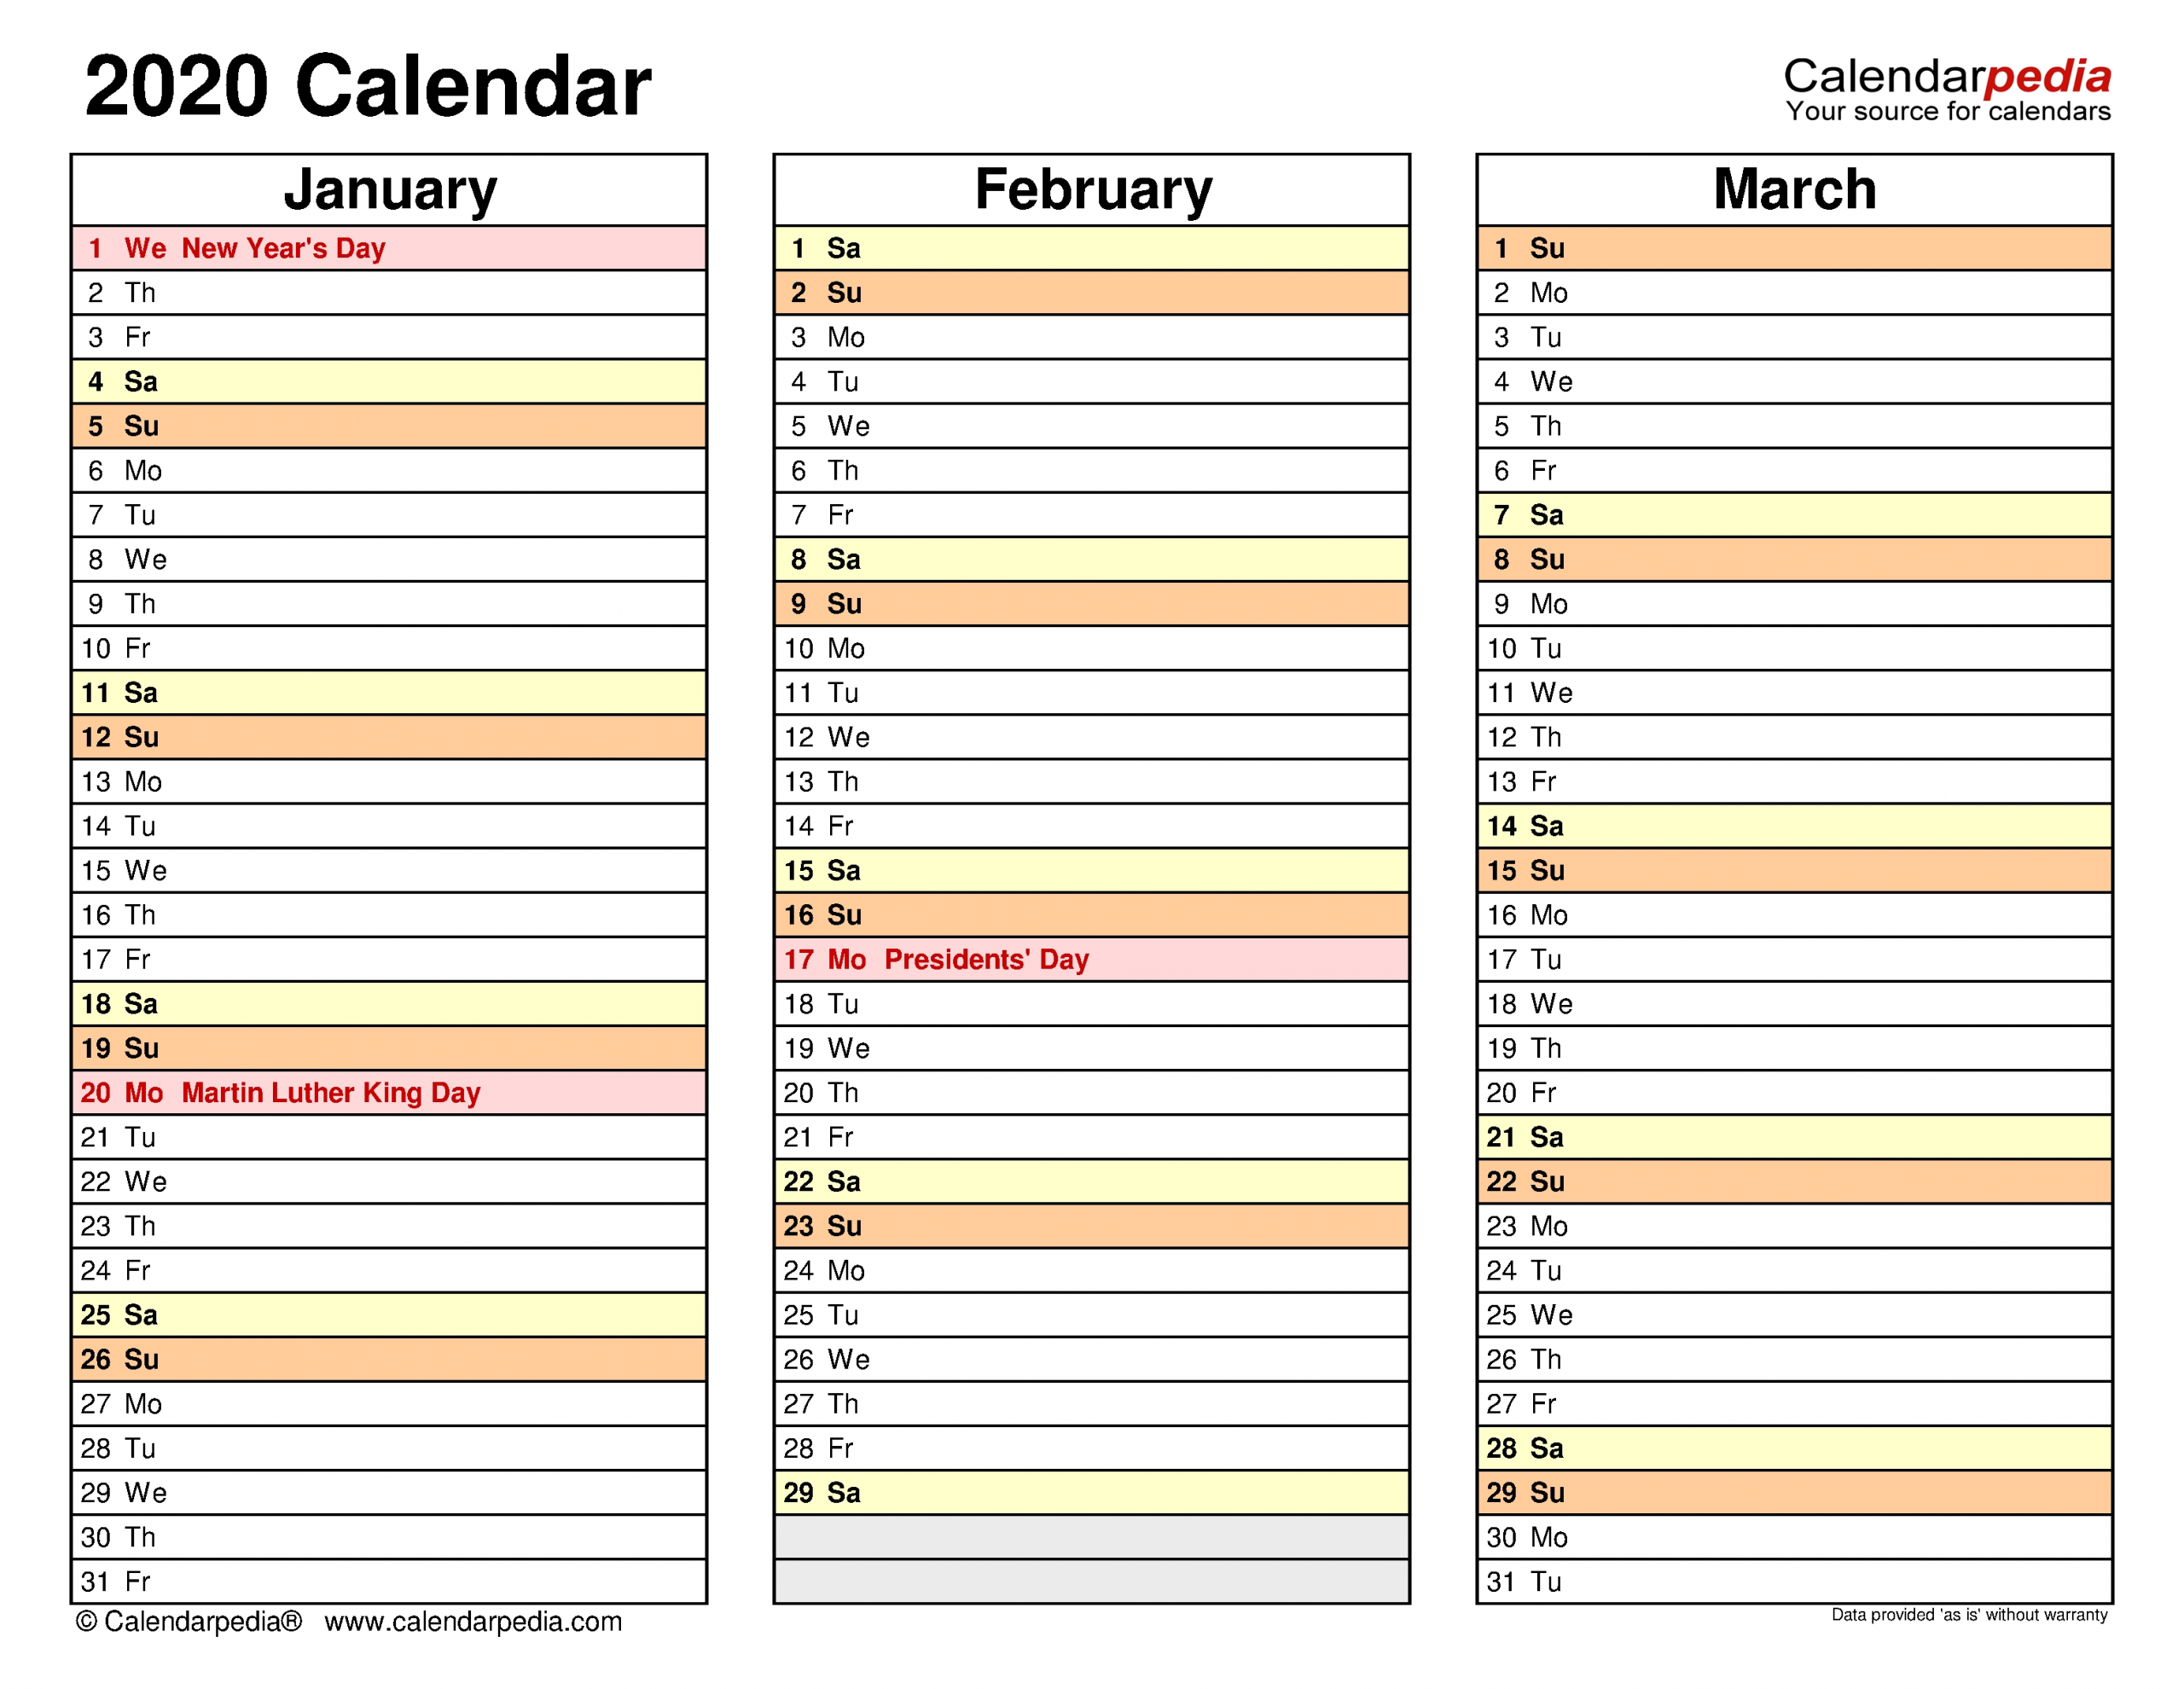 2020 Calendar - Free Printable Word Templates - Calendarpedia